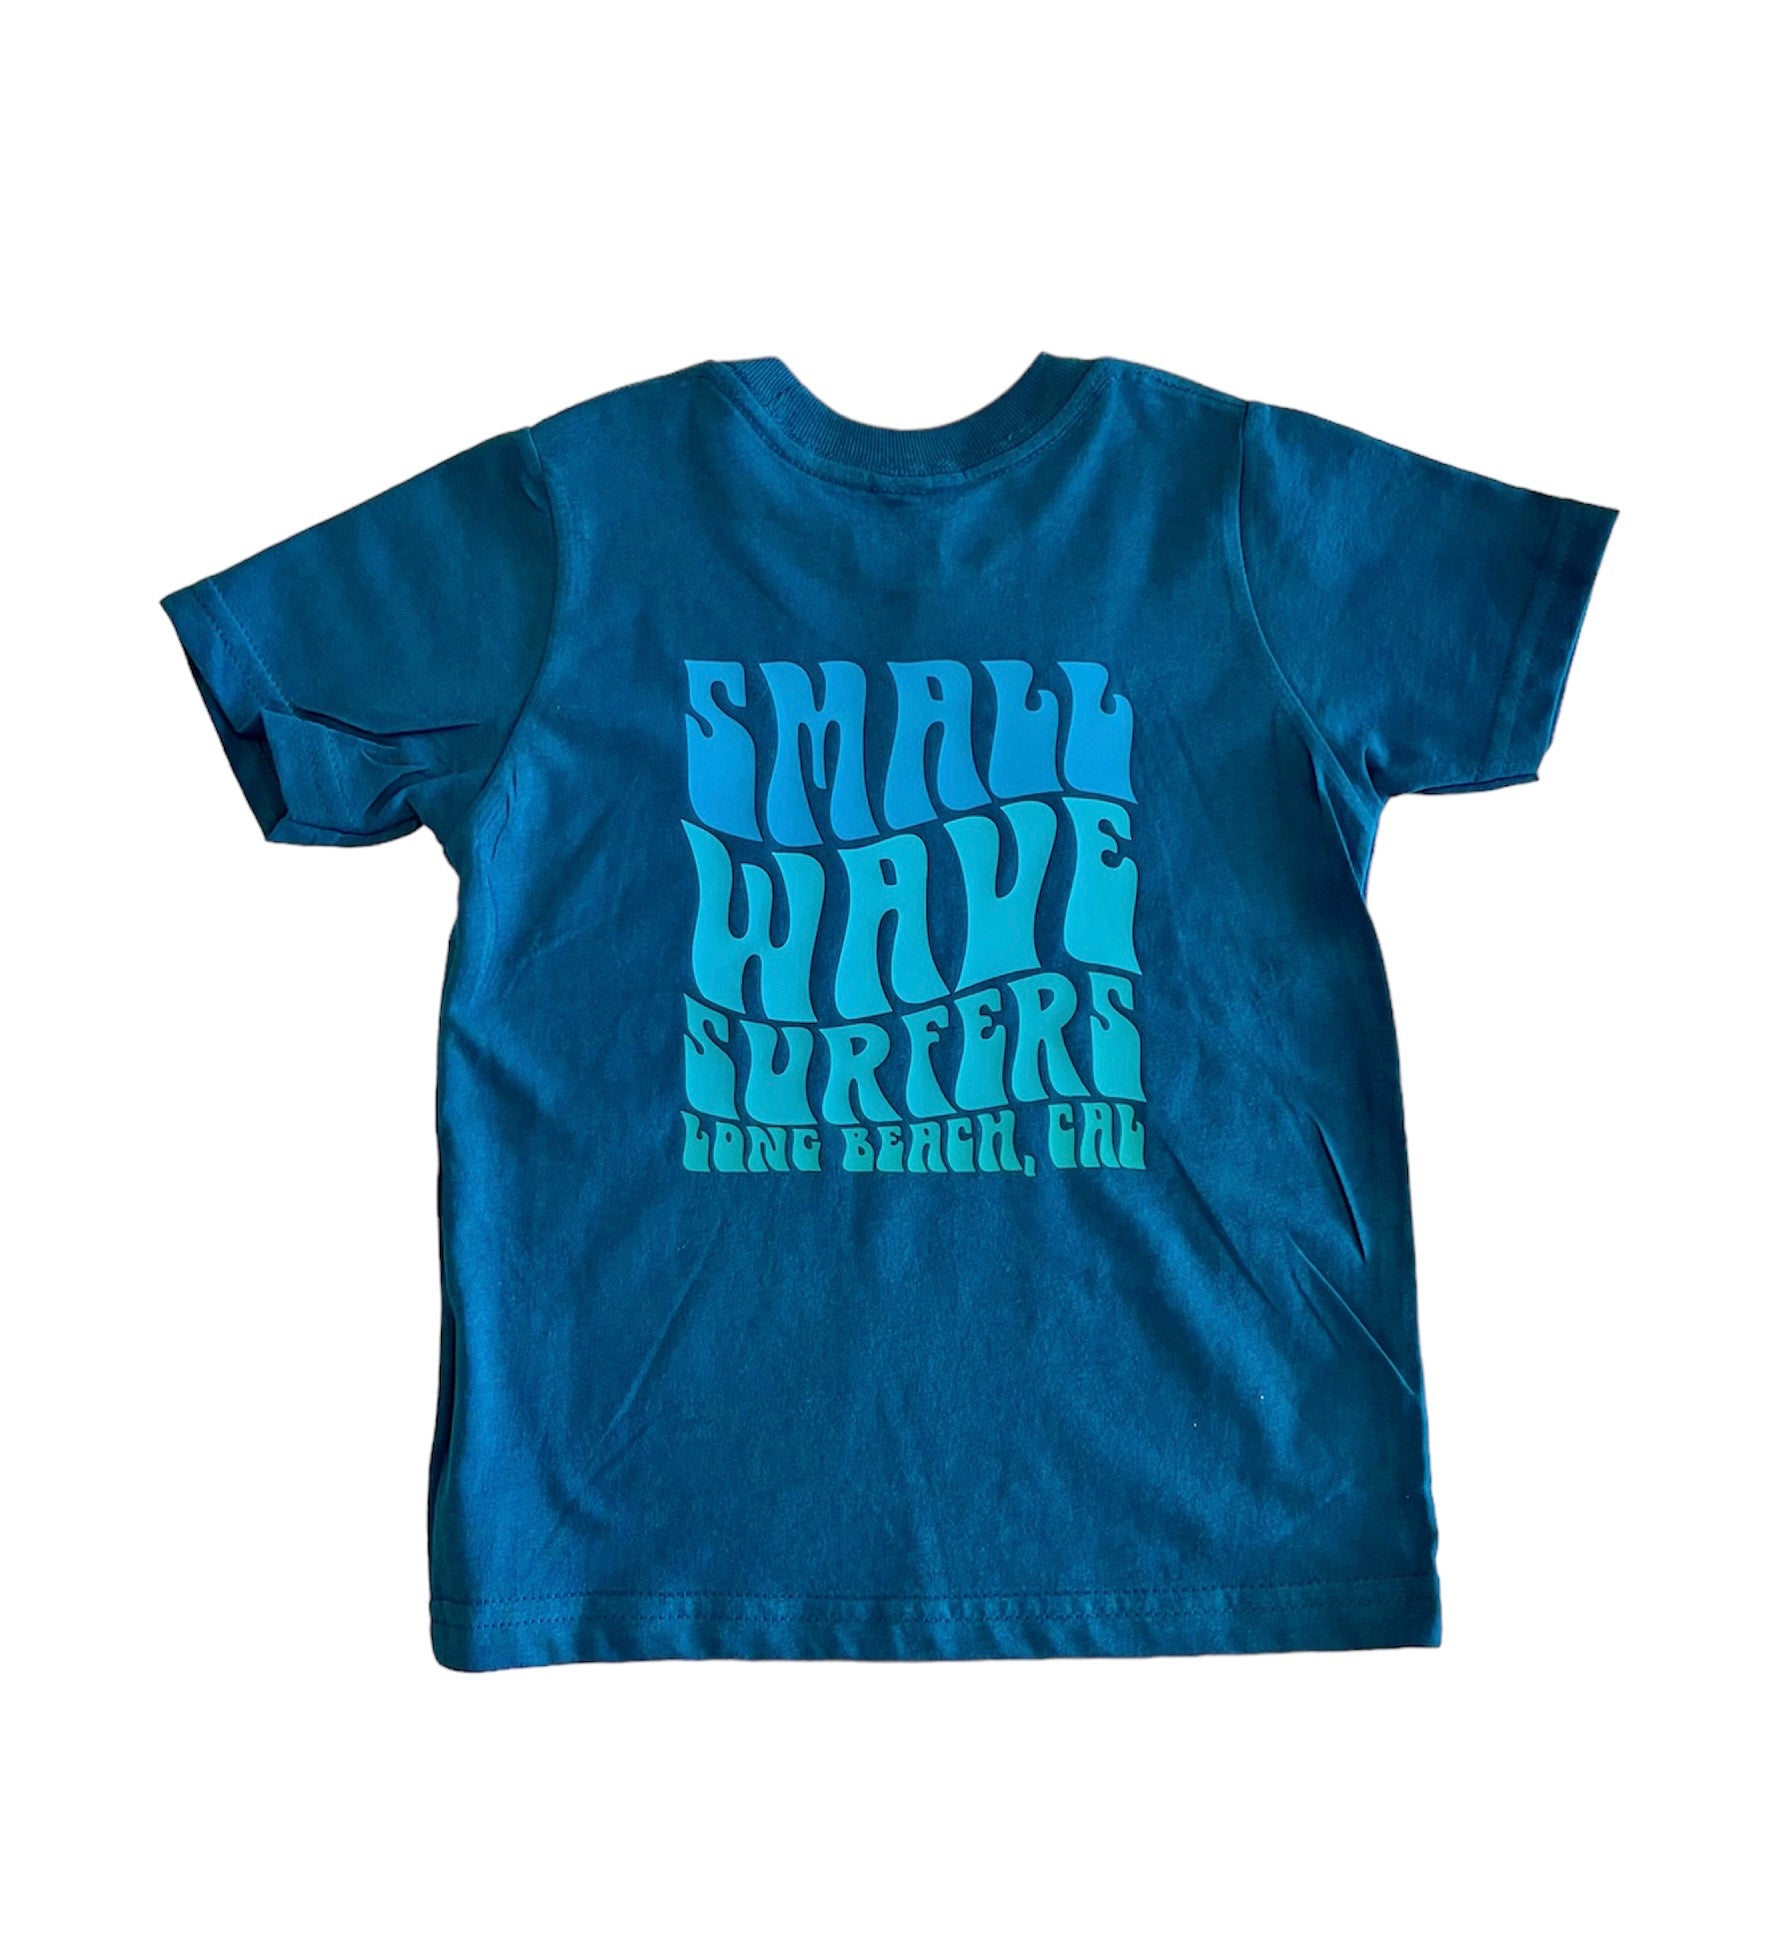 LB Sea | Shorebreak Toddler Short Sleeve Tee